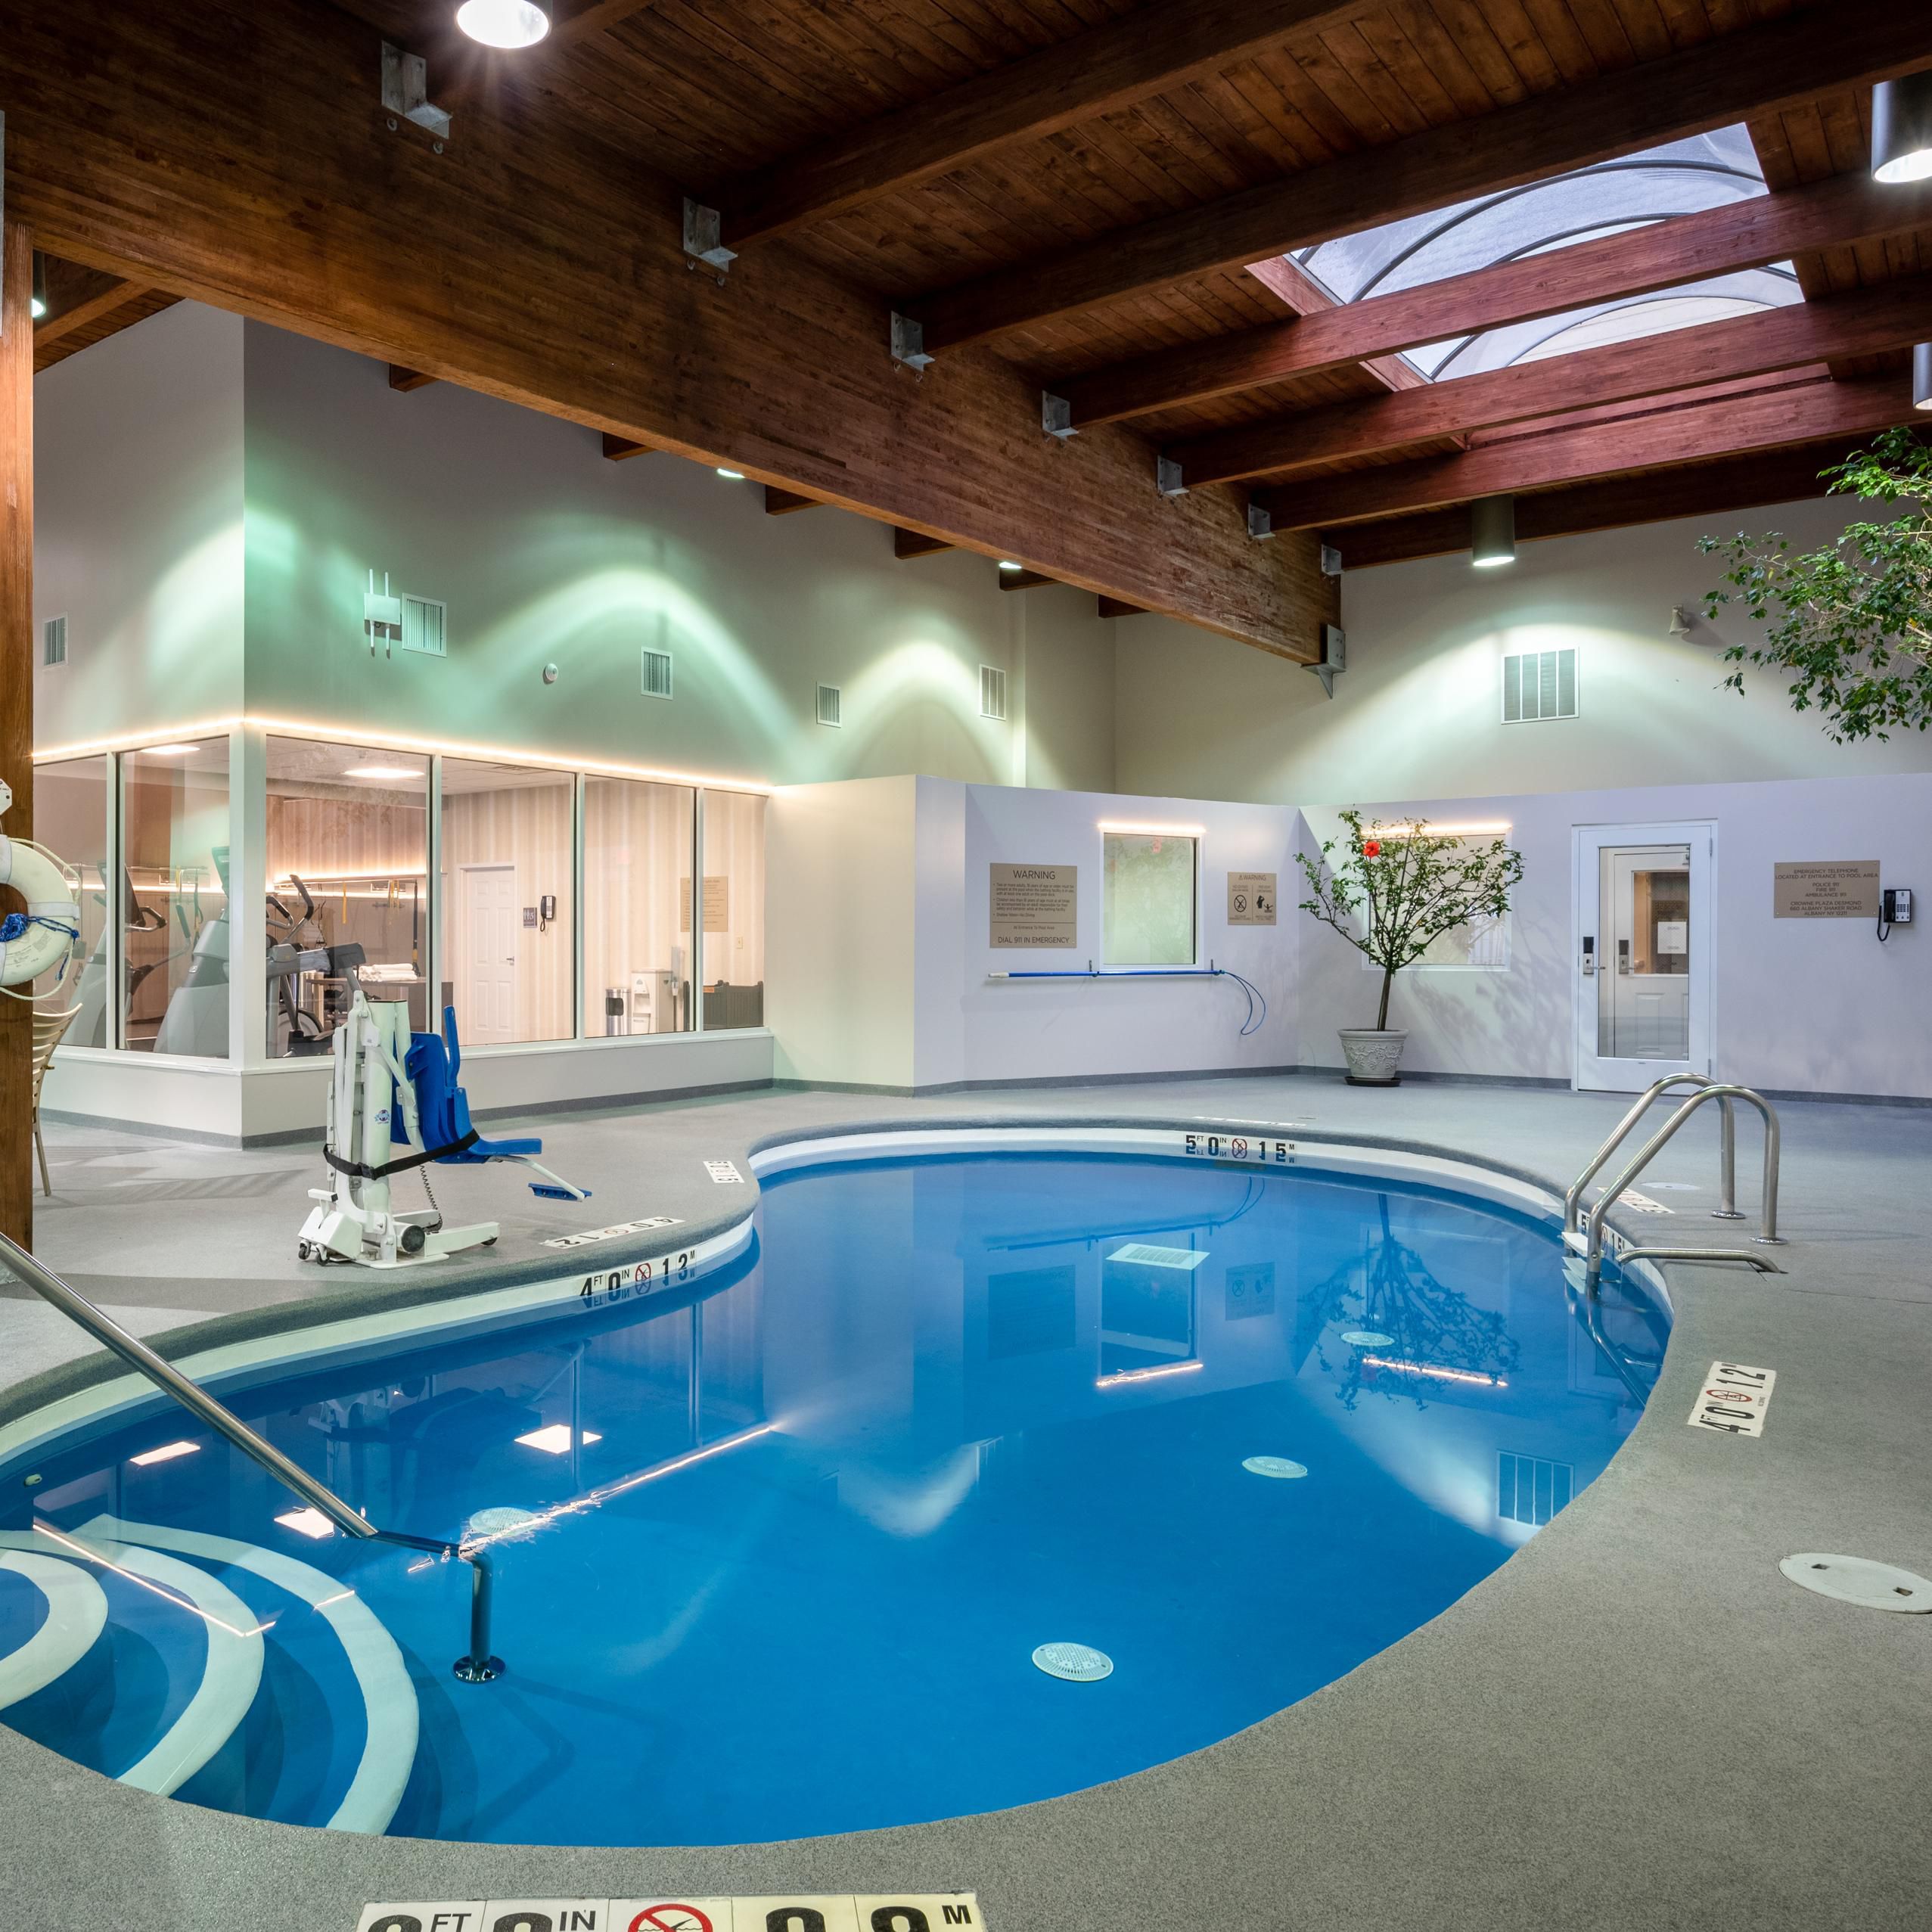 Indoor heated pool with ADA/handicap accessible lift